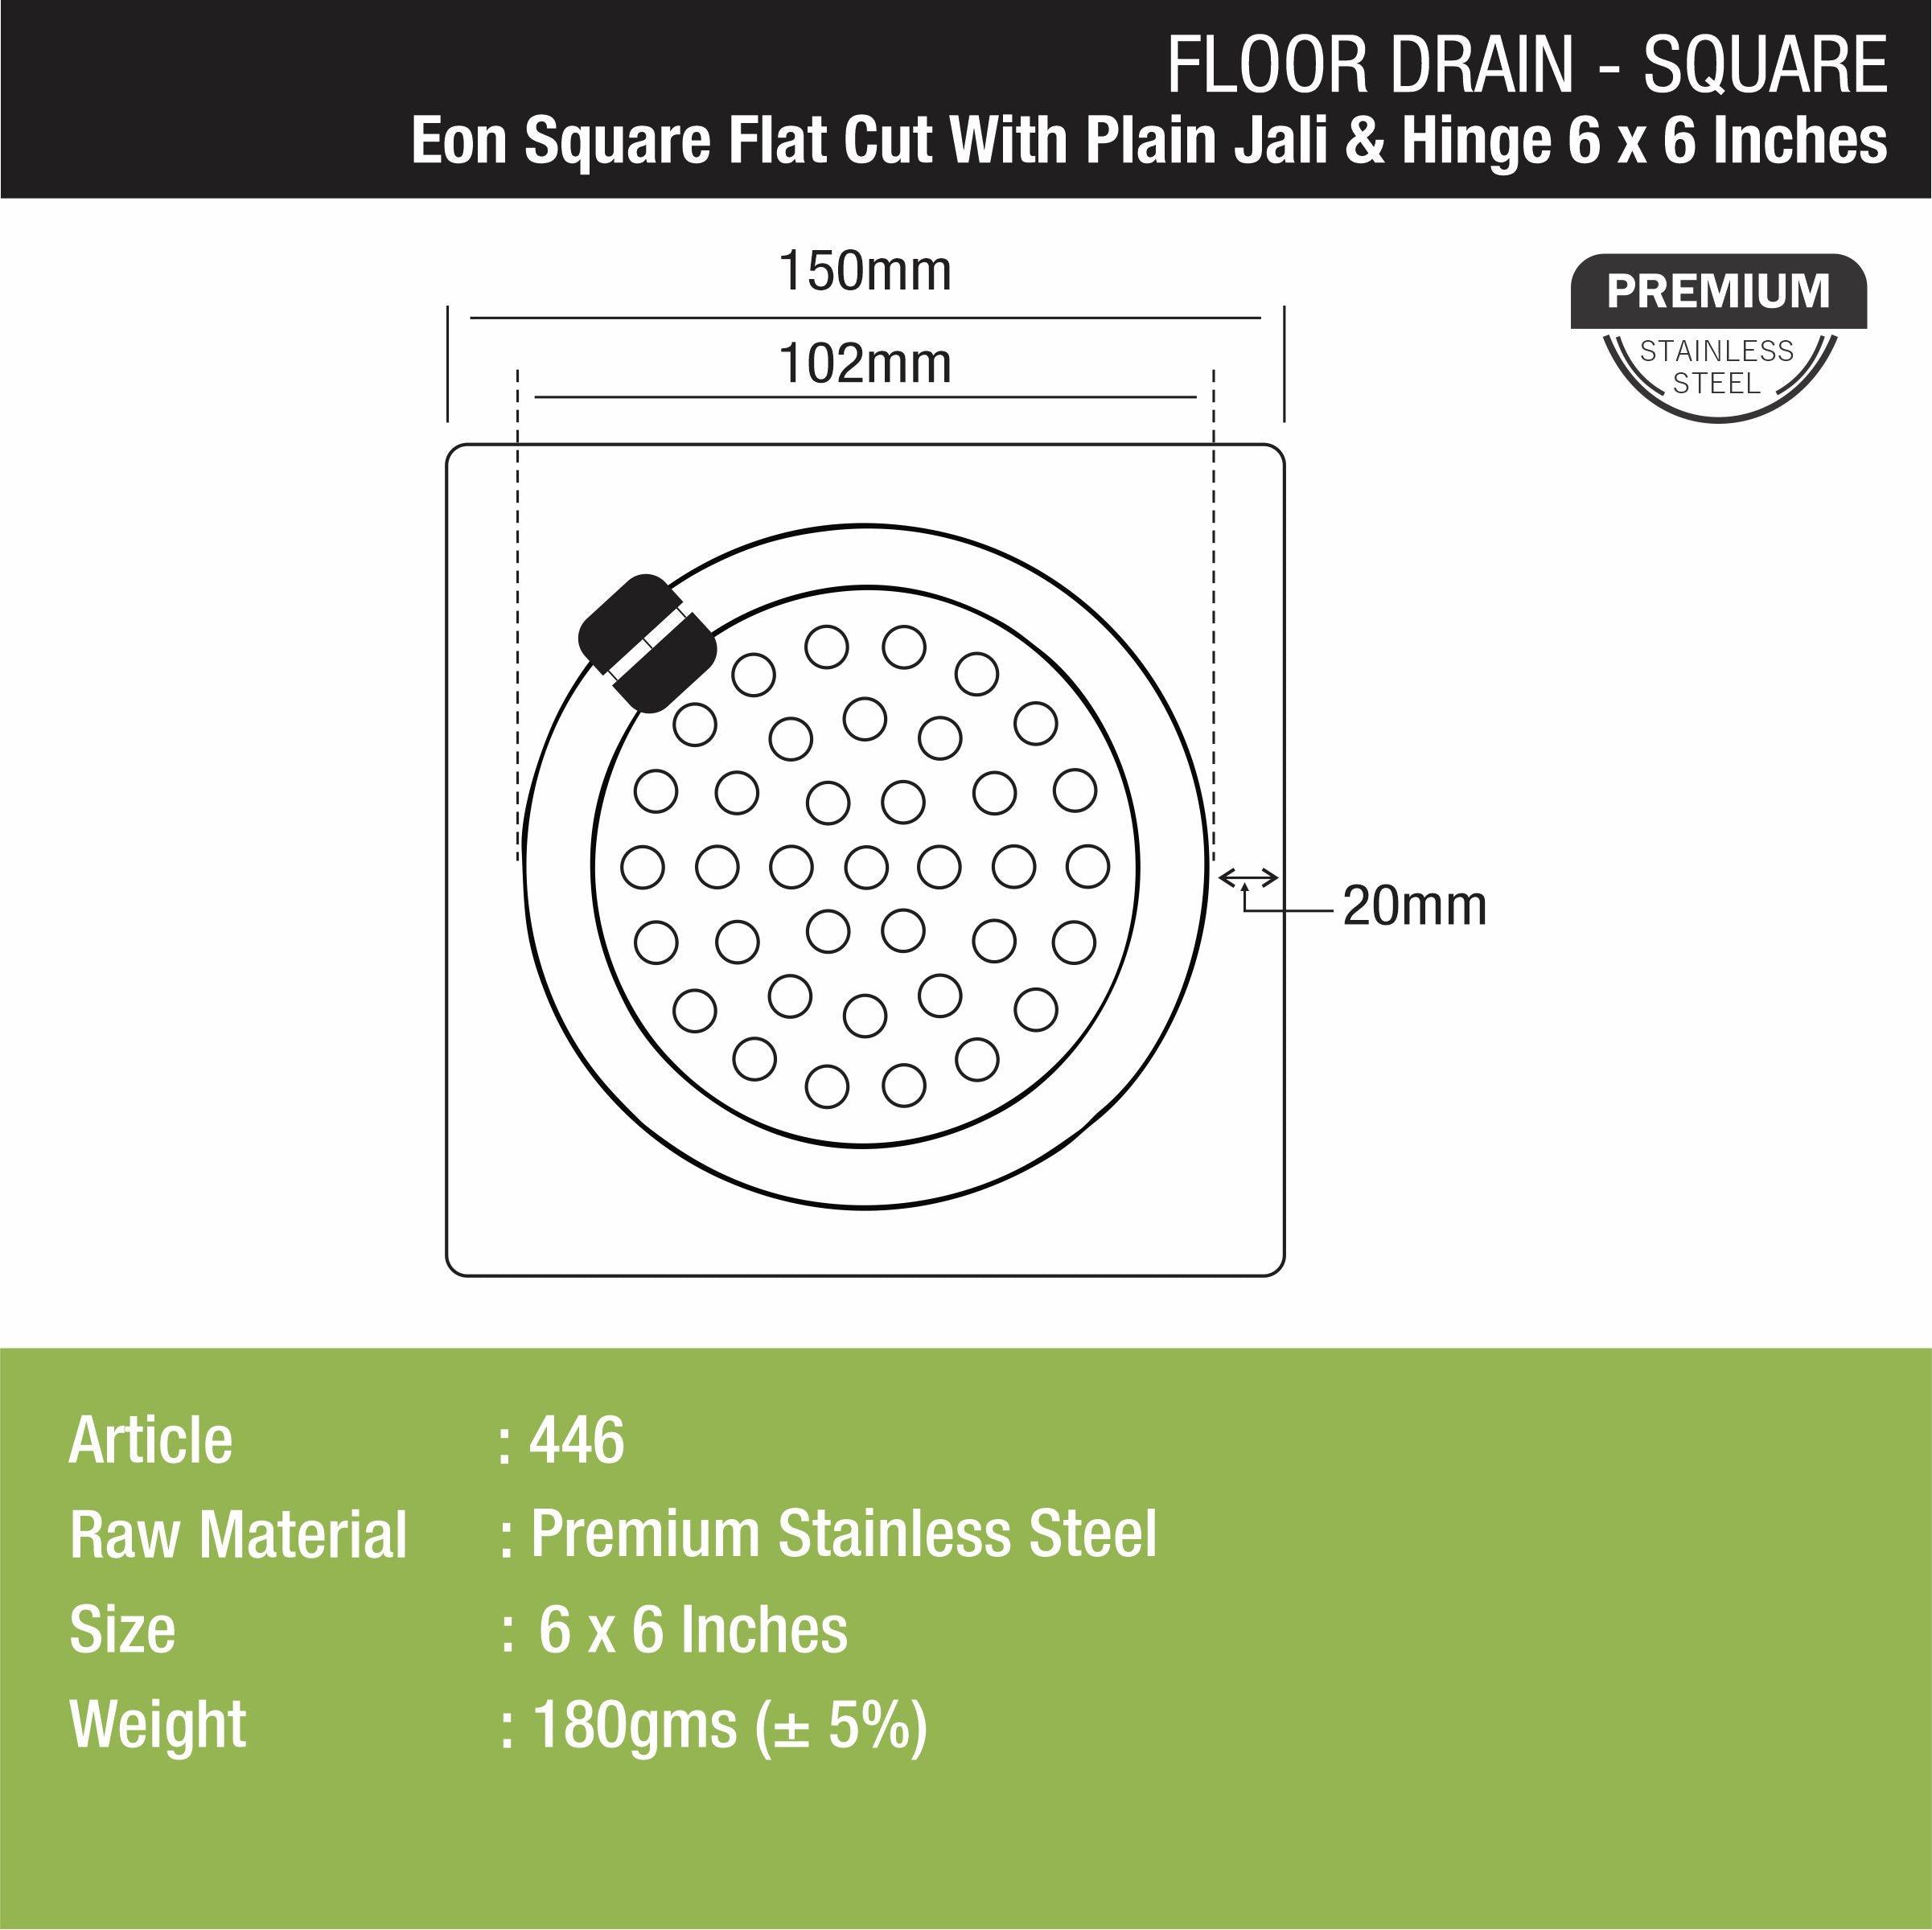 Eon Square Flat Cut Floor Drain with Plain Jali and Hinge (6 x 6 Inches) - LIPKA